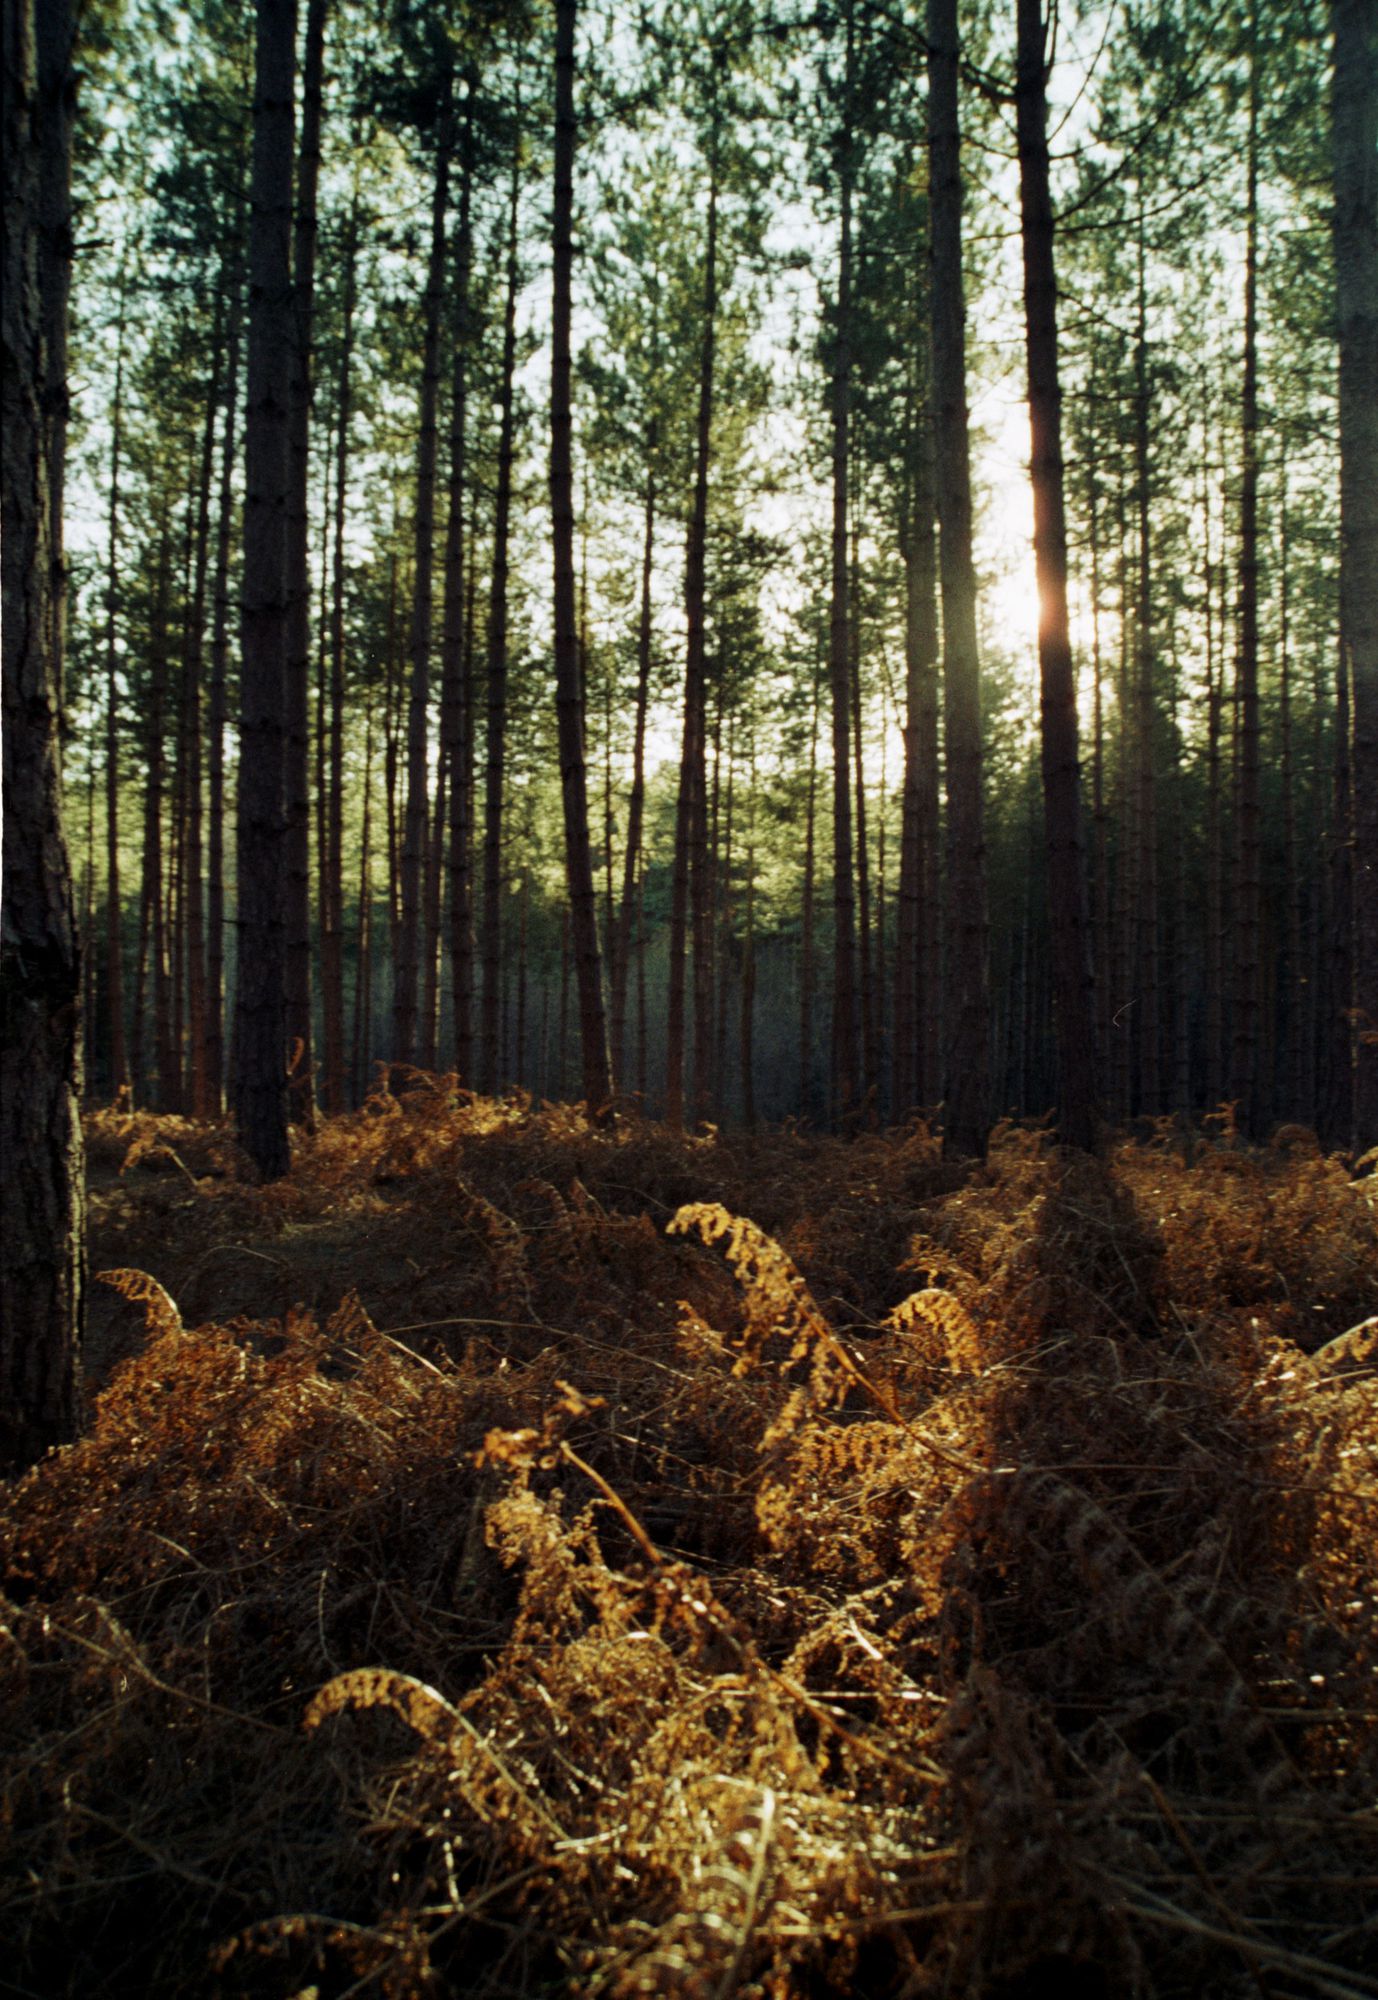 Broxbourne Wood - Winter Ferns